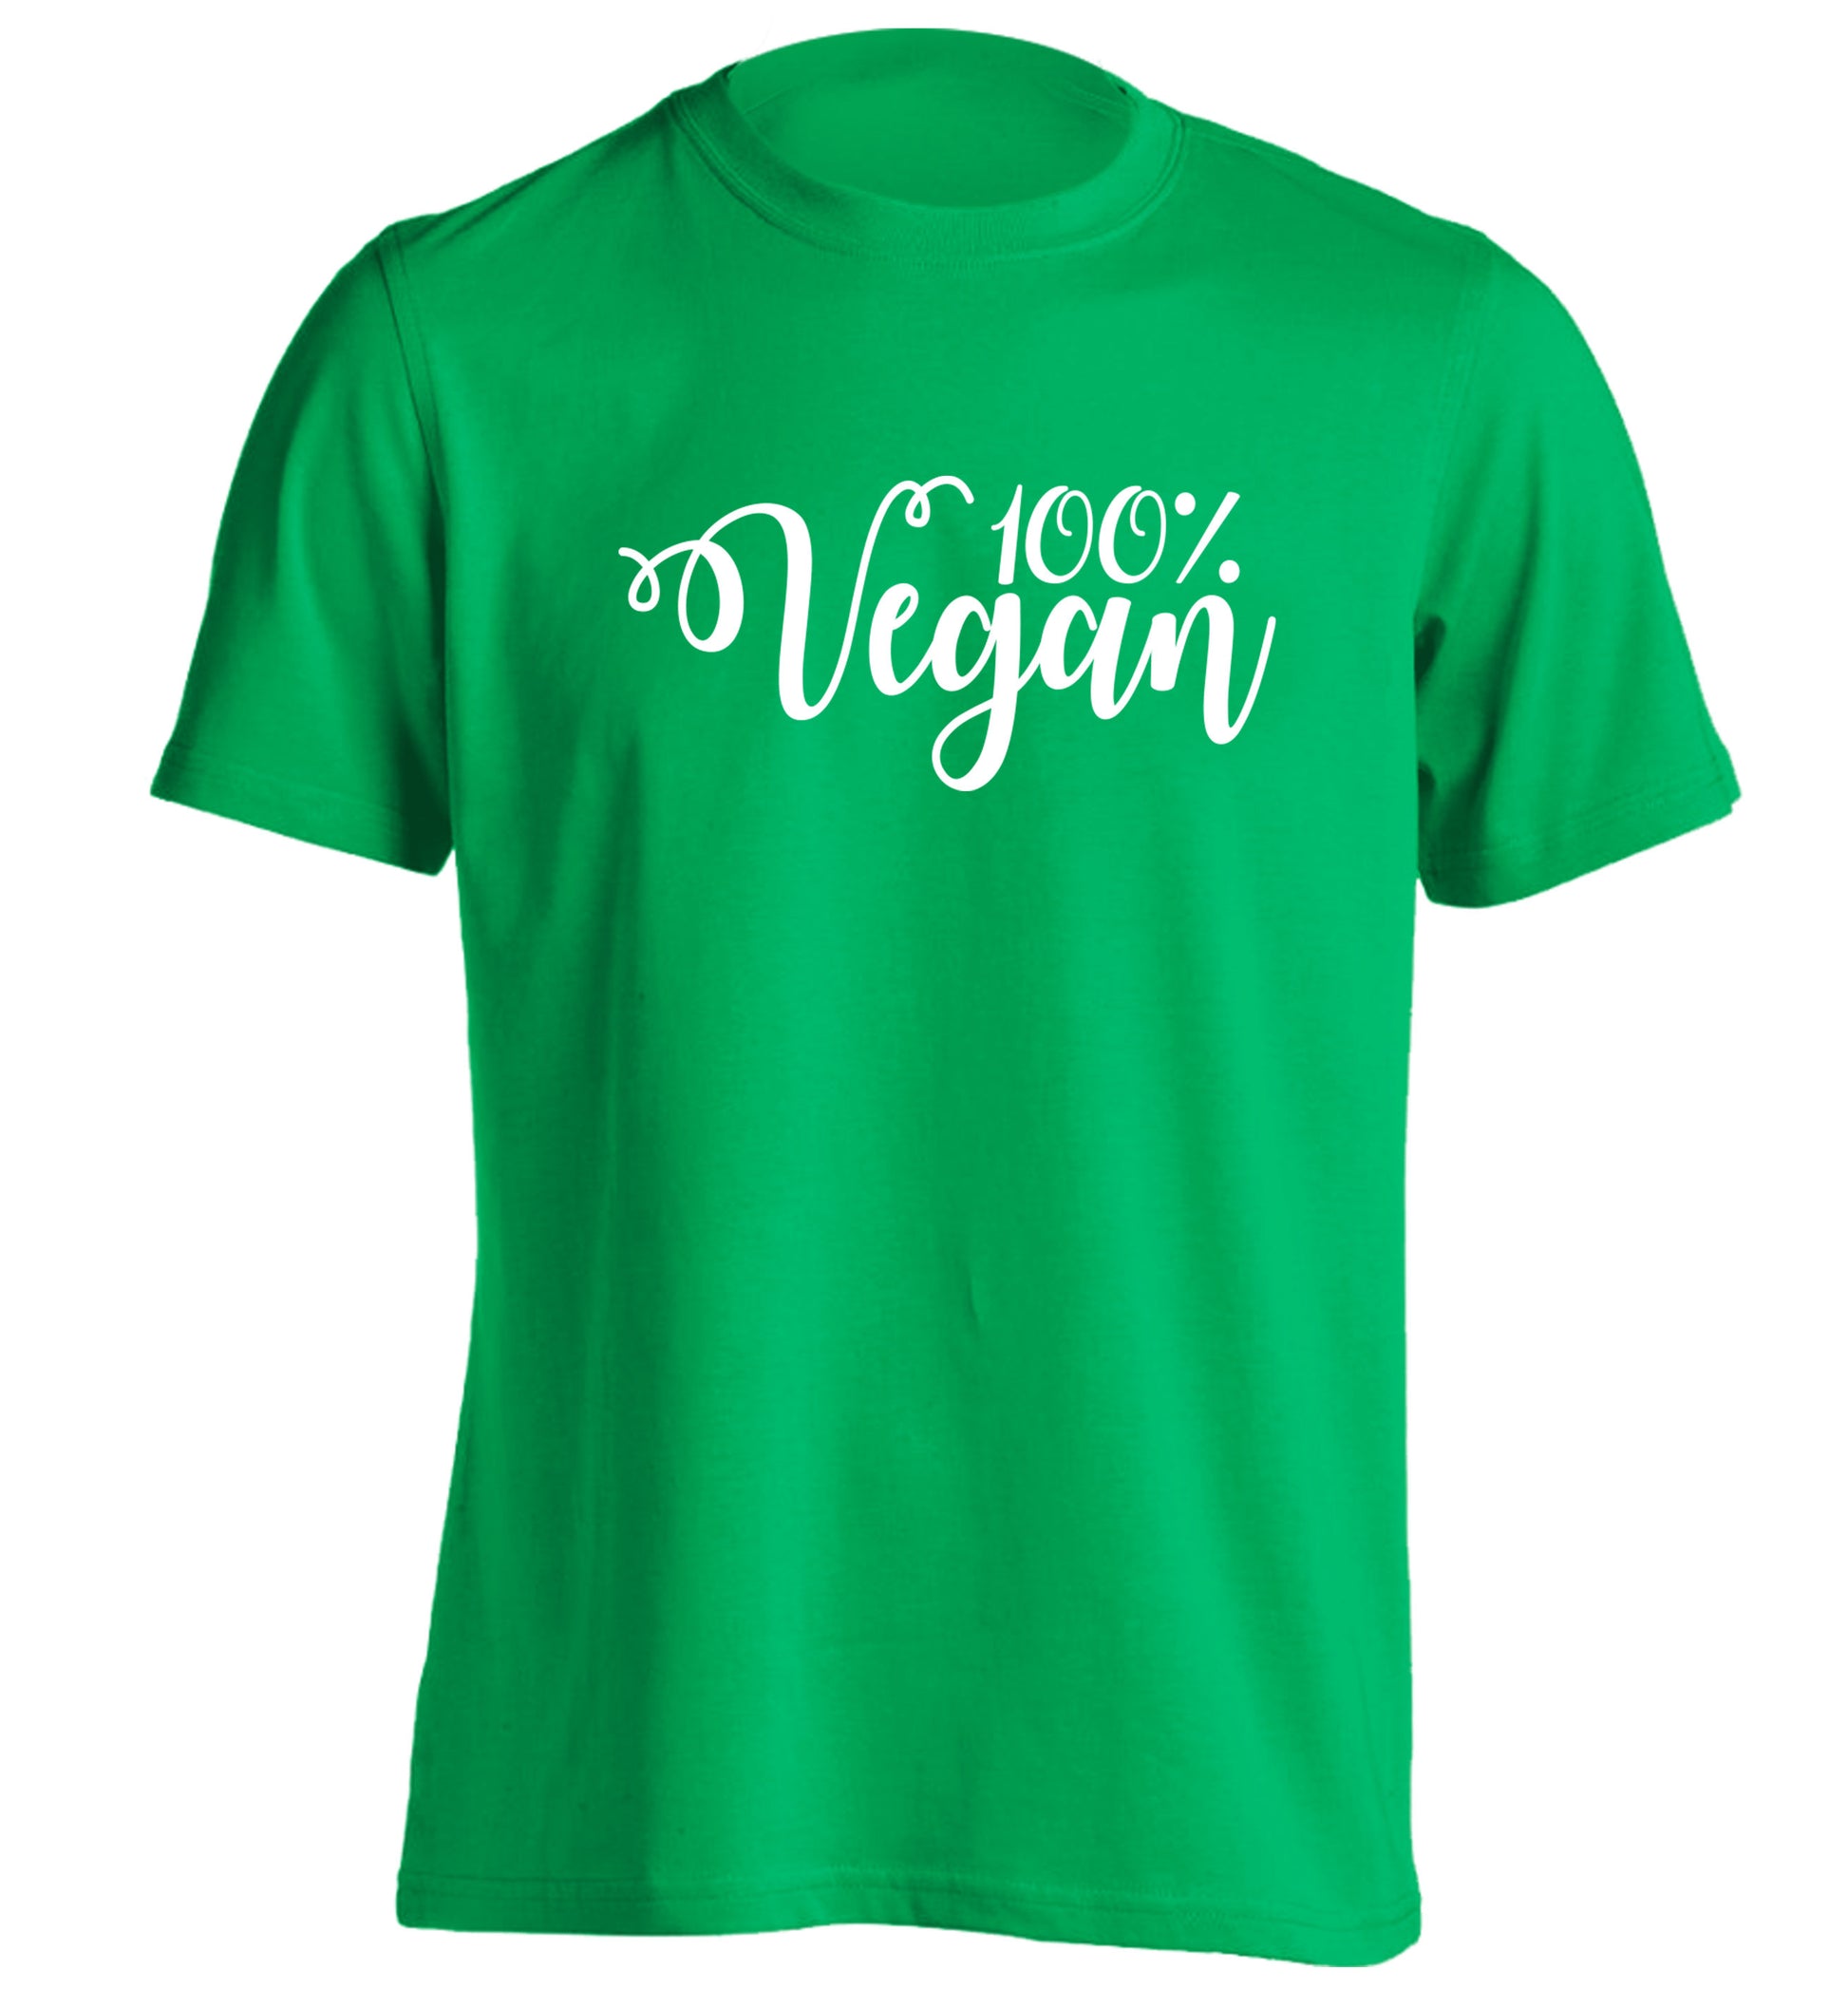 100% Vegan adults unisex green Tshirt 2XL